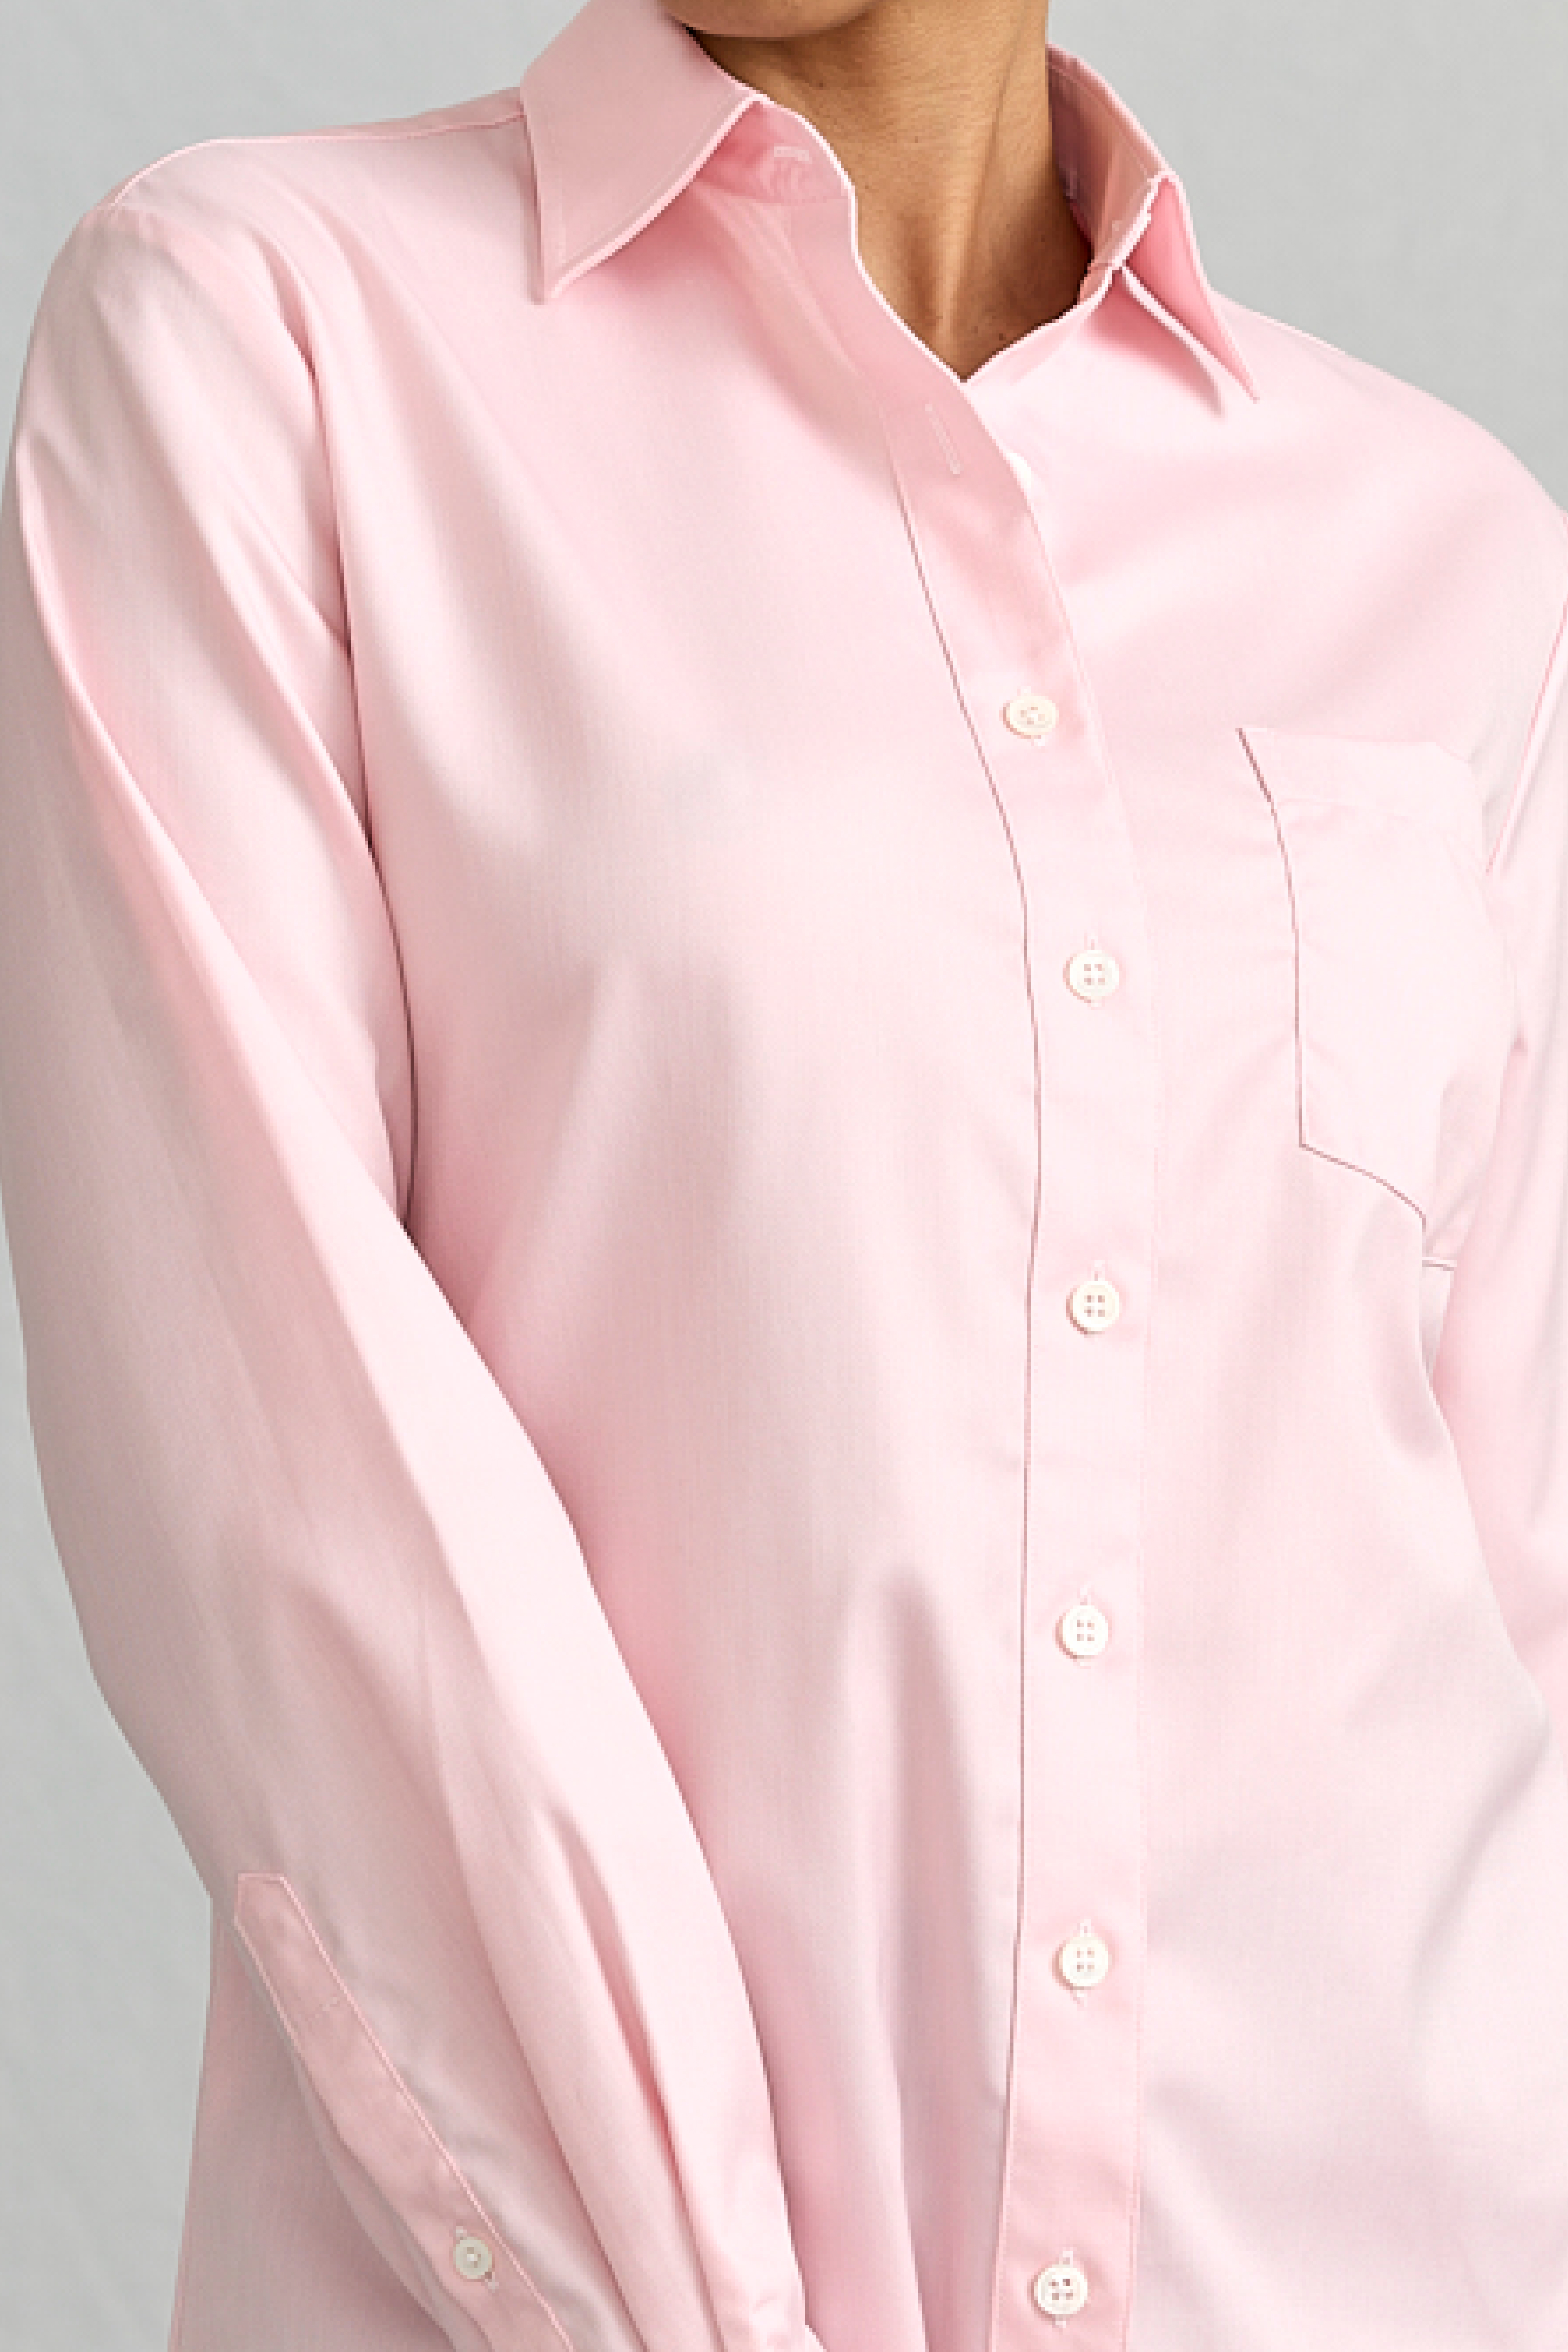 fashionrework Thomas Pink Oxford Shirt